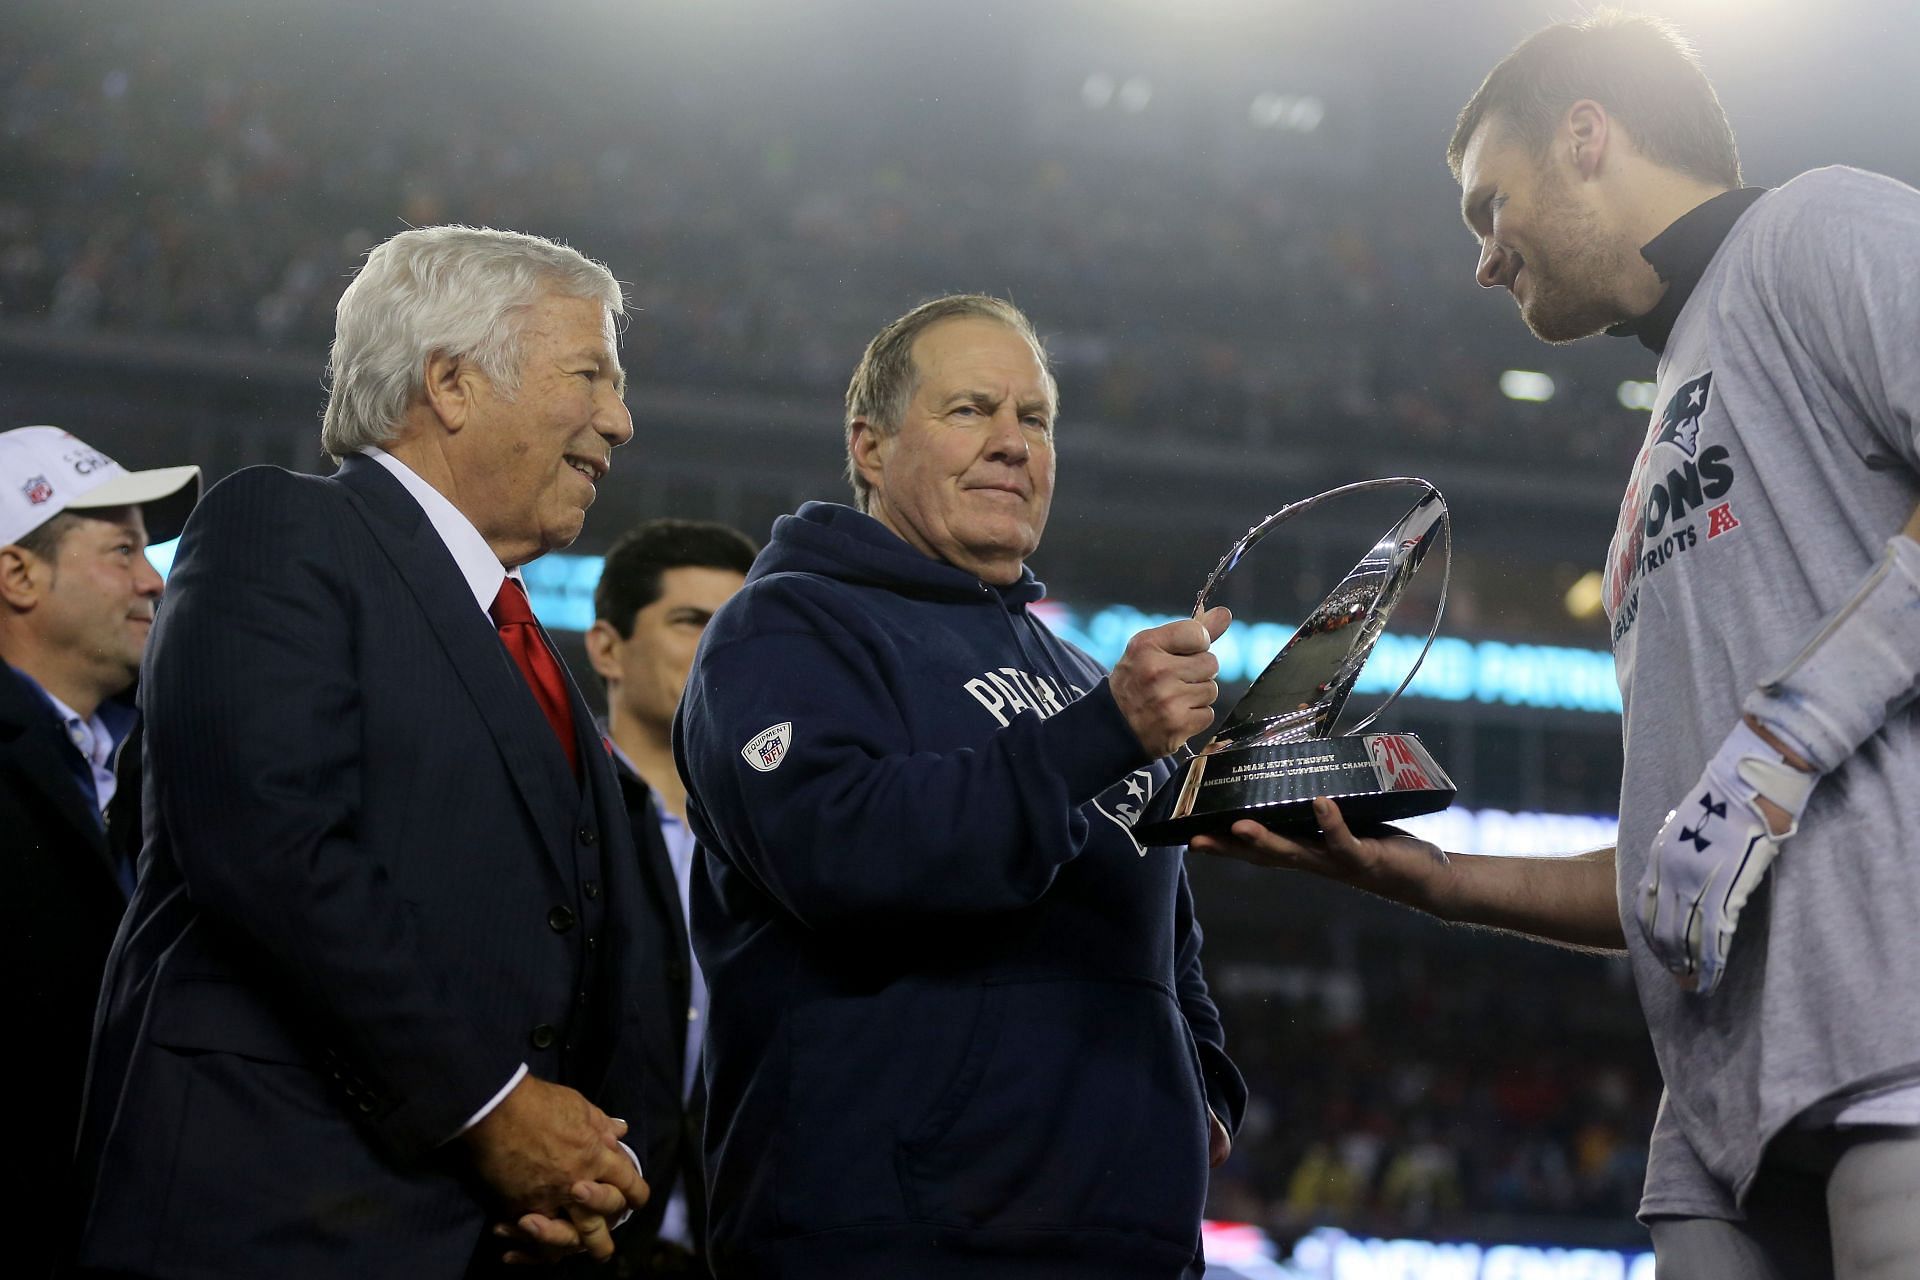 AFC Championship - Bill Belichick and Tom Brady of New England Patriots